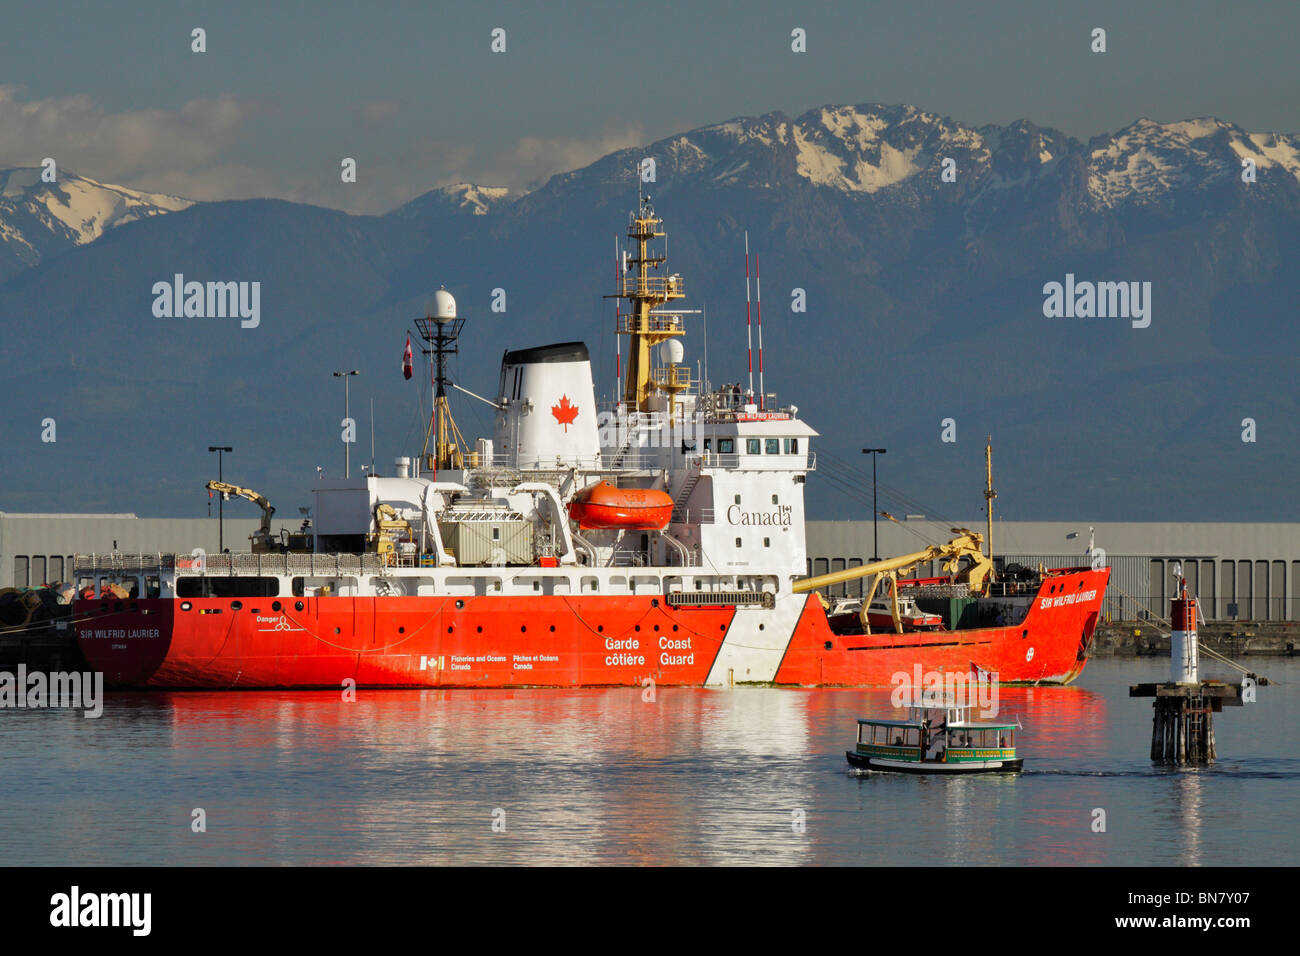 Canadian coast guard vessel in harbour-Victoria, British Columbia, Canada. Stock Photo